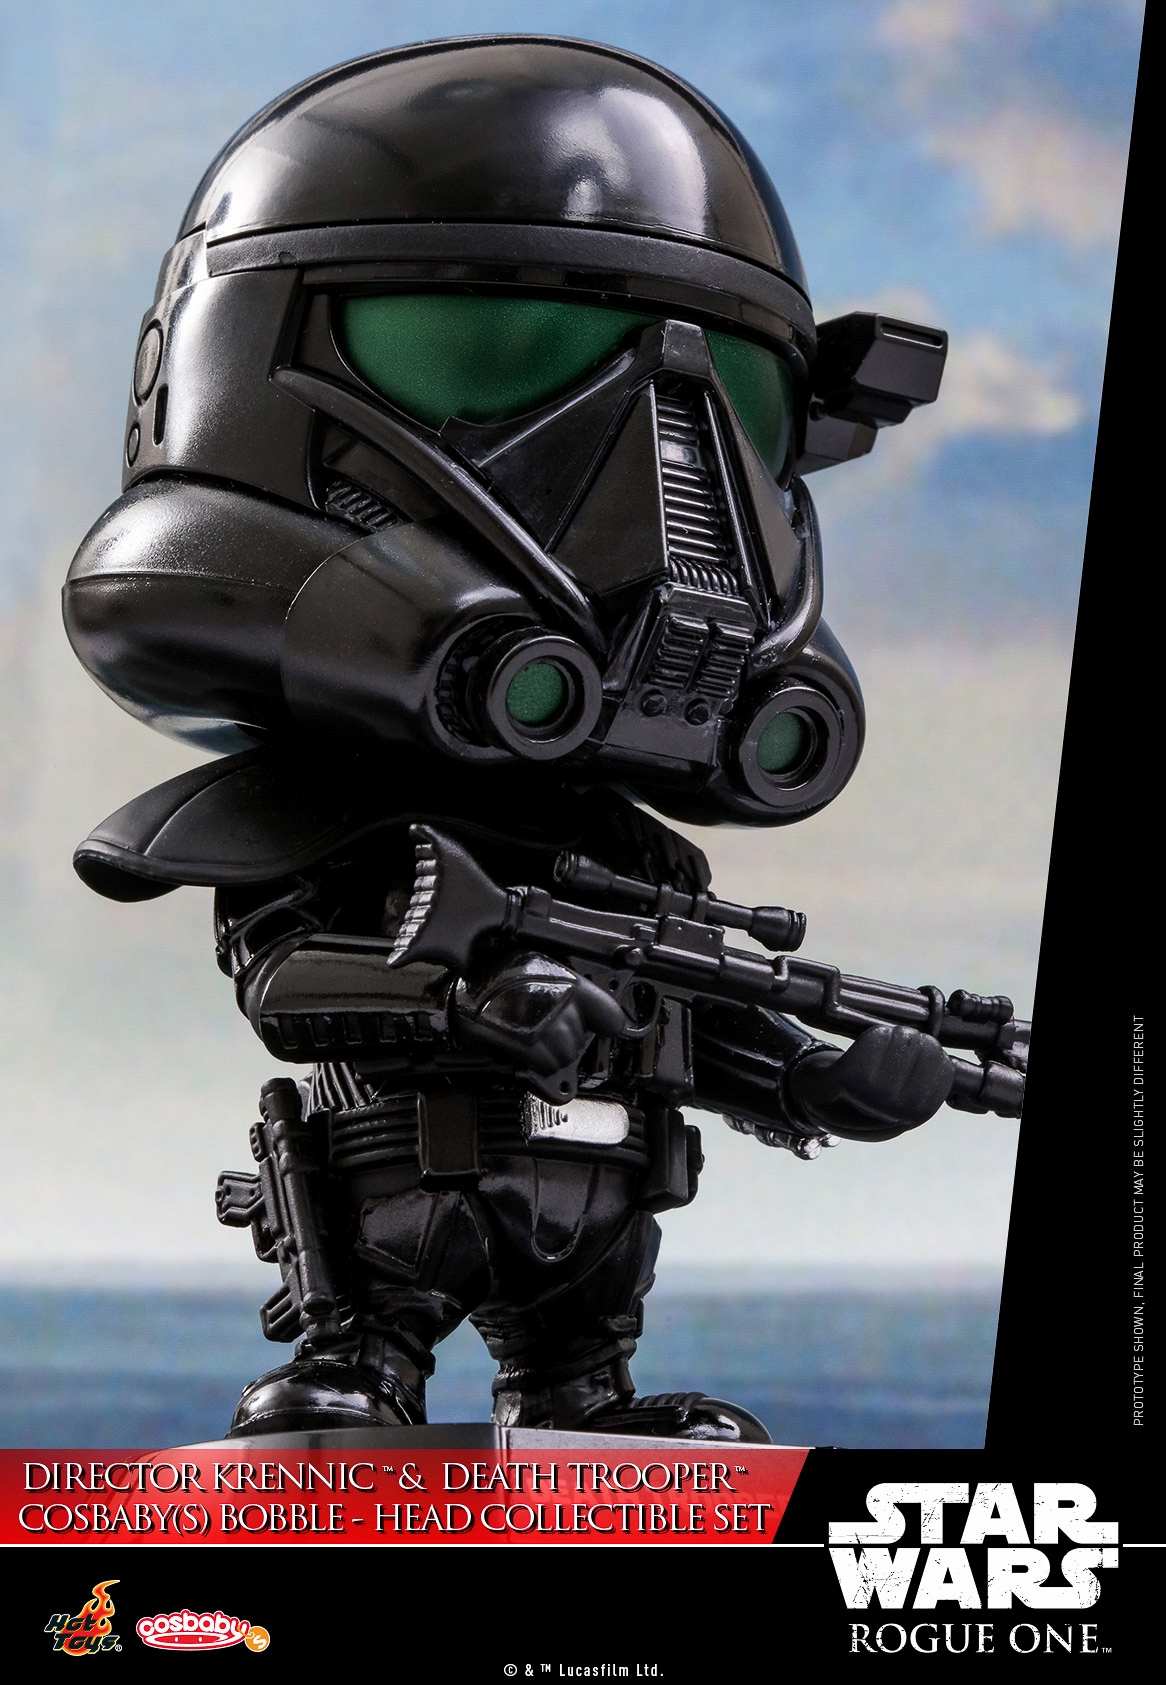 Hot-Toys-COSB347-Director-Krennic-Death-Trooper-Specialist-006.jpg